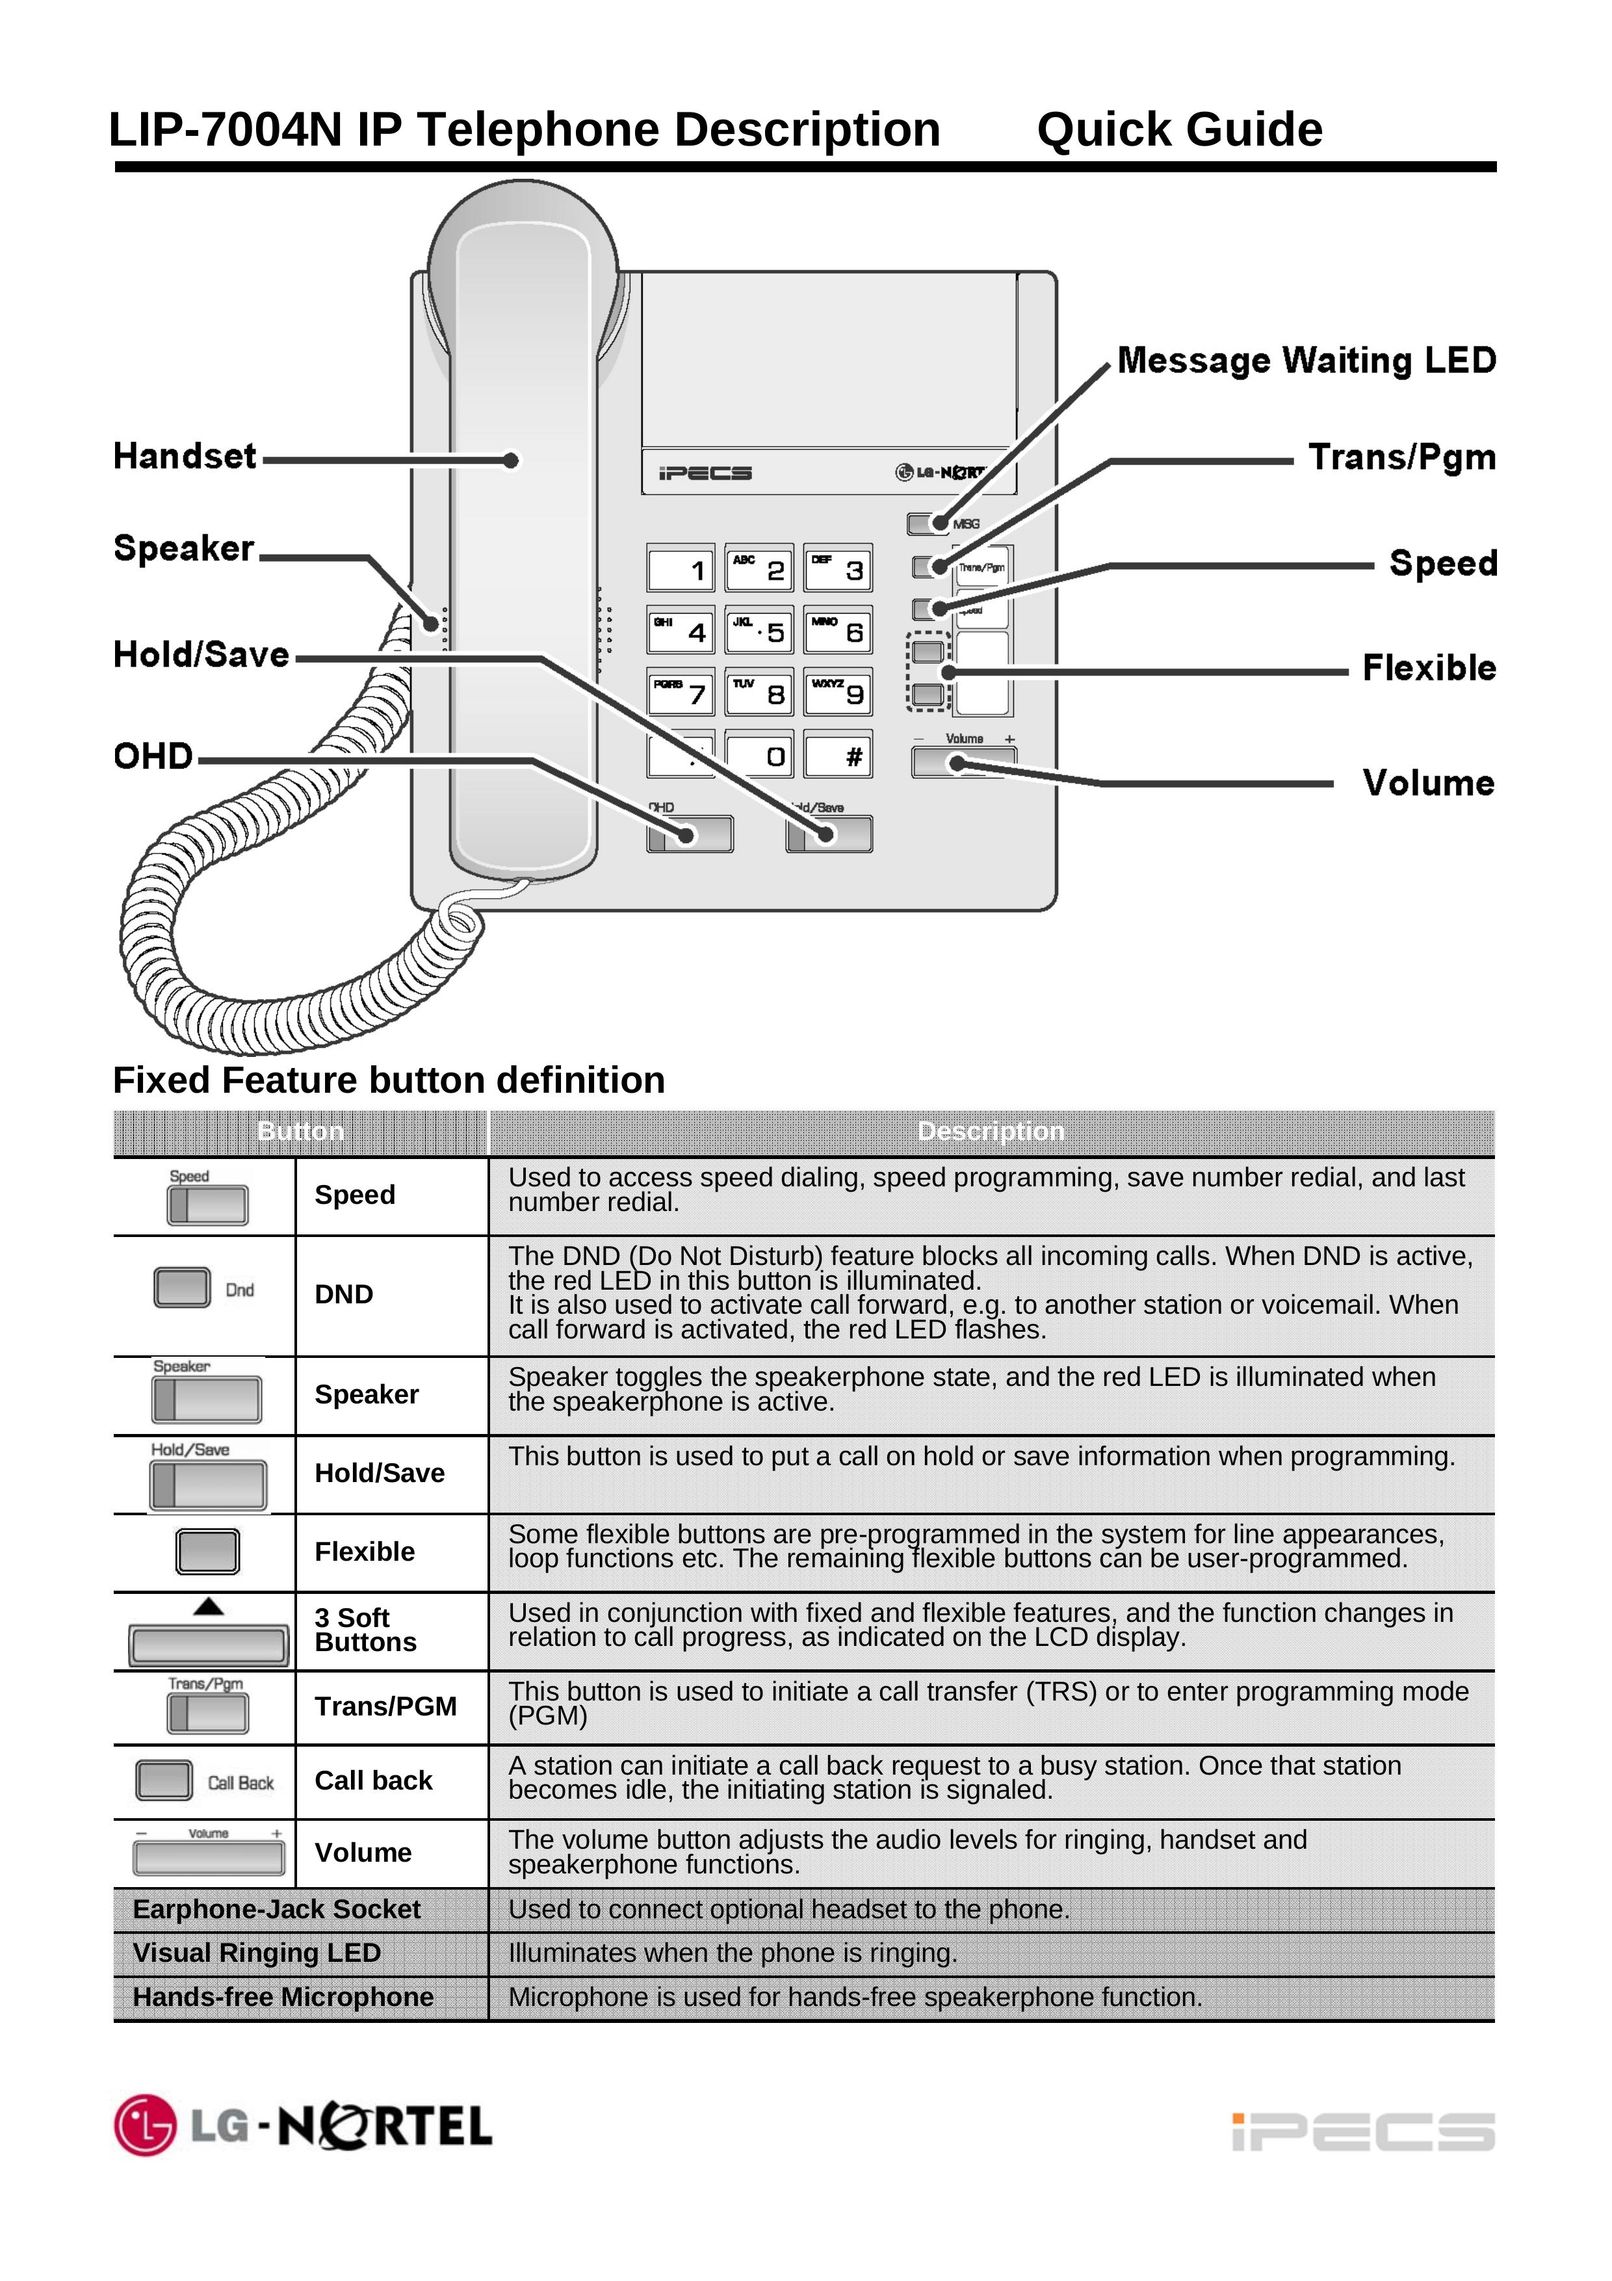 LG Electronics LIP-7004N Telephone User Manual